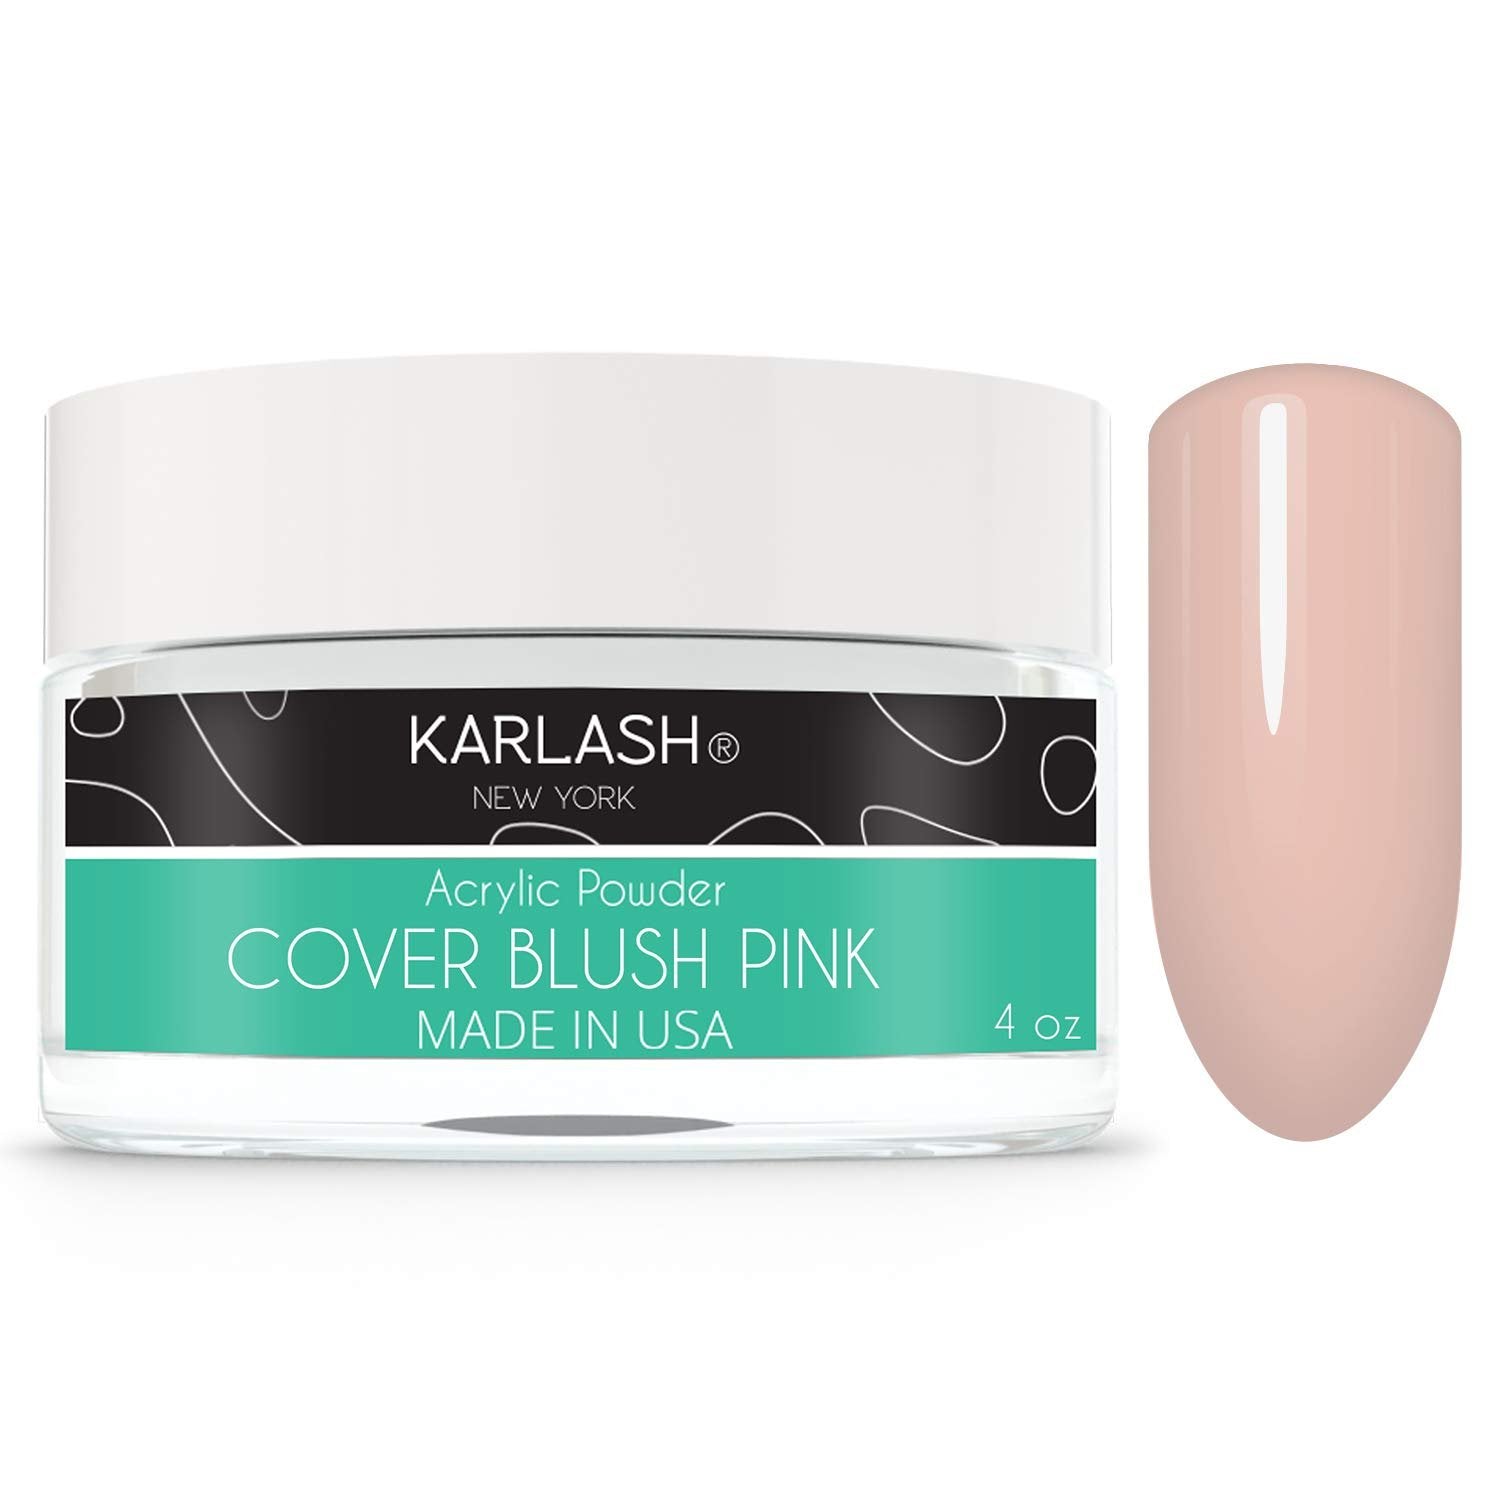 Karlash Professional Acrylic Powder Cover Blush Pink 4 oz